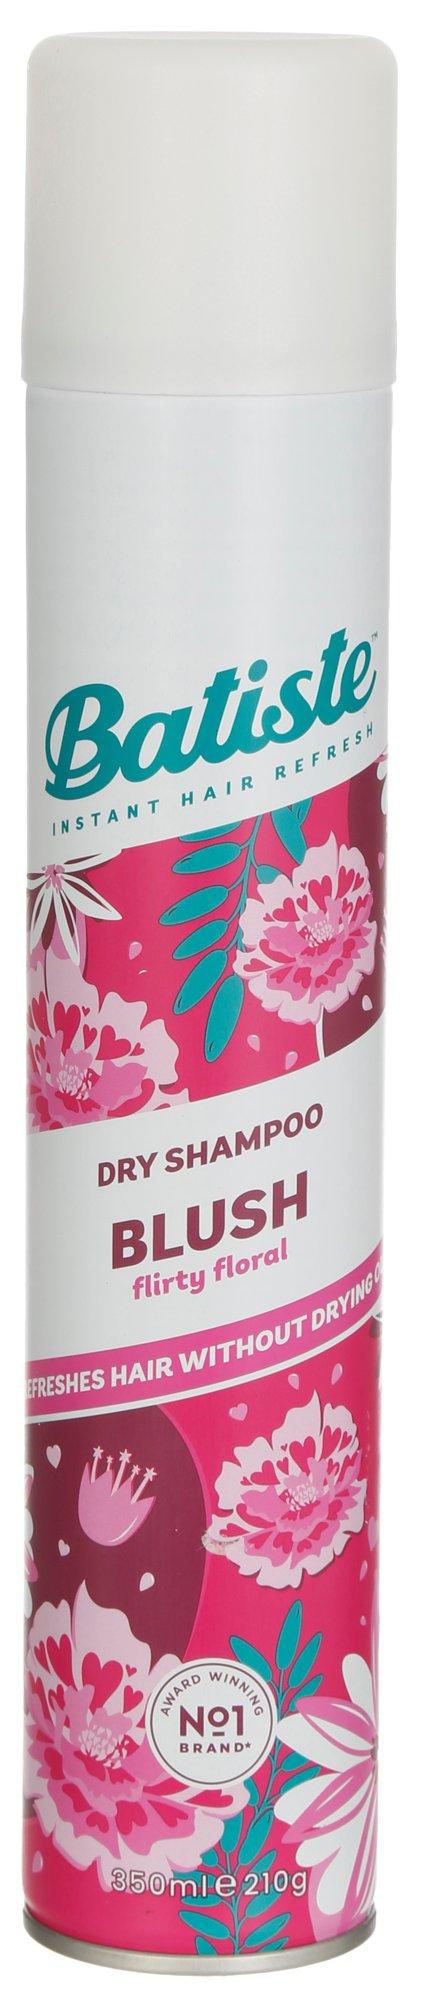 11.8 oz Flirty Floral Blush Dry Shampoo